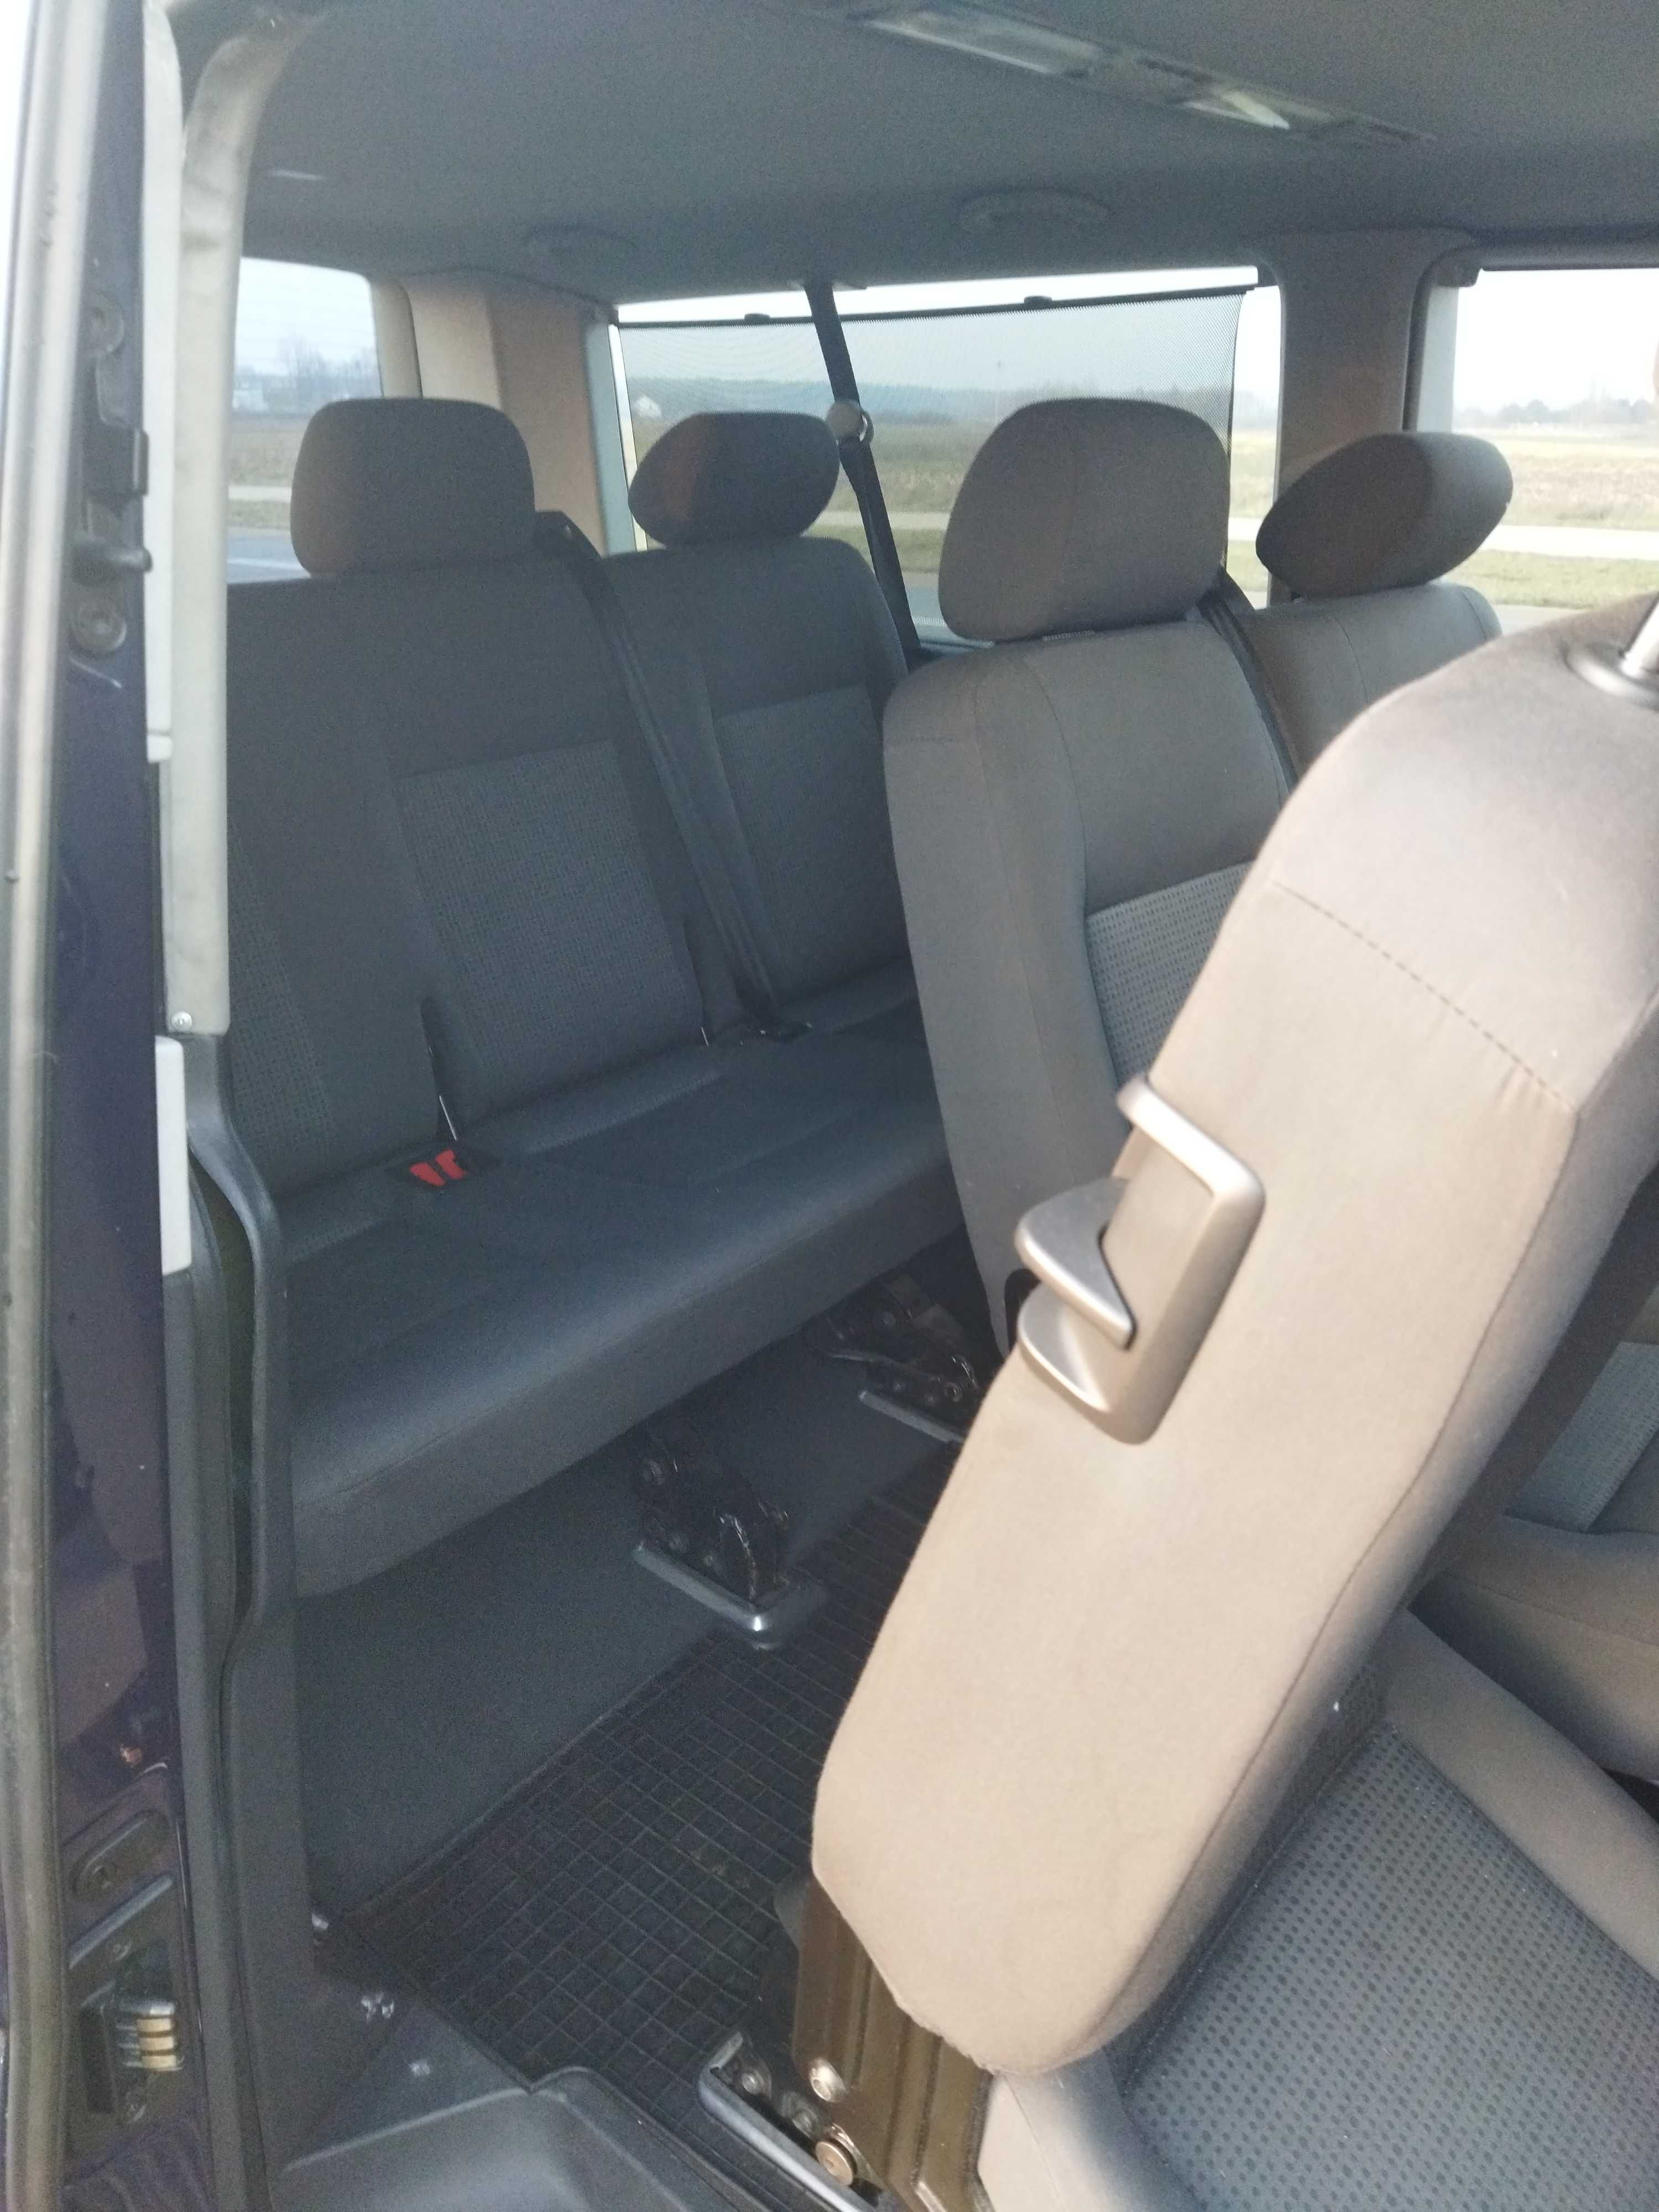 Kanapy siedzenia fotele antracyt Volkswagen T5 Caravelle Transporter